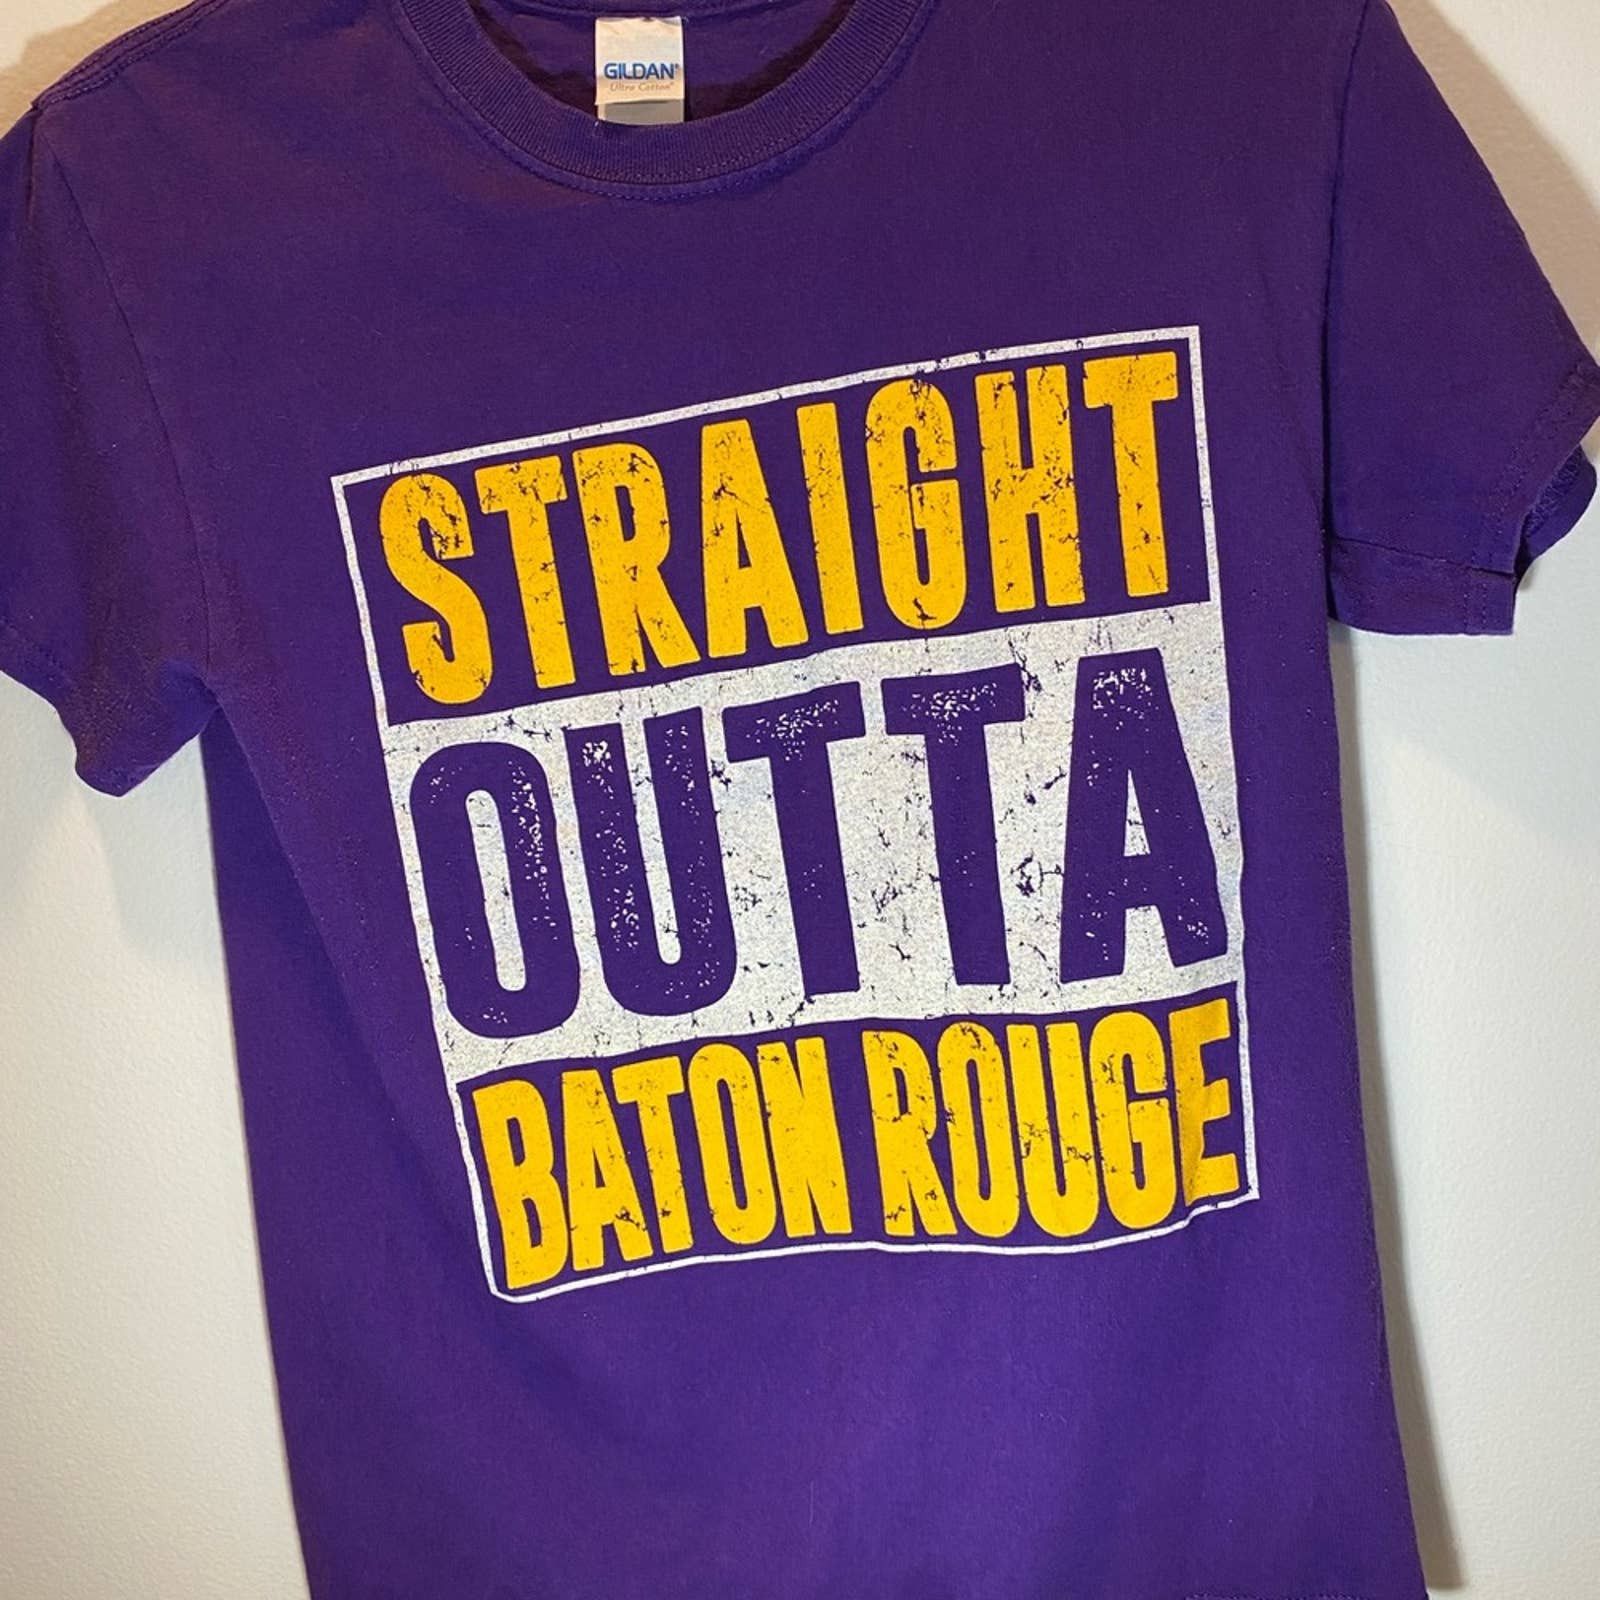 Gildan LSU Apparel, Straight Outta Baton Rouge Shirt small